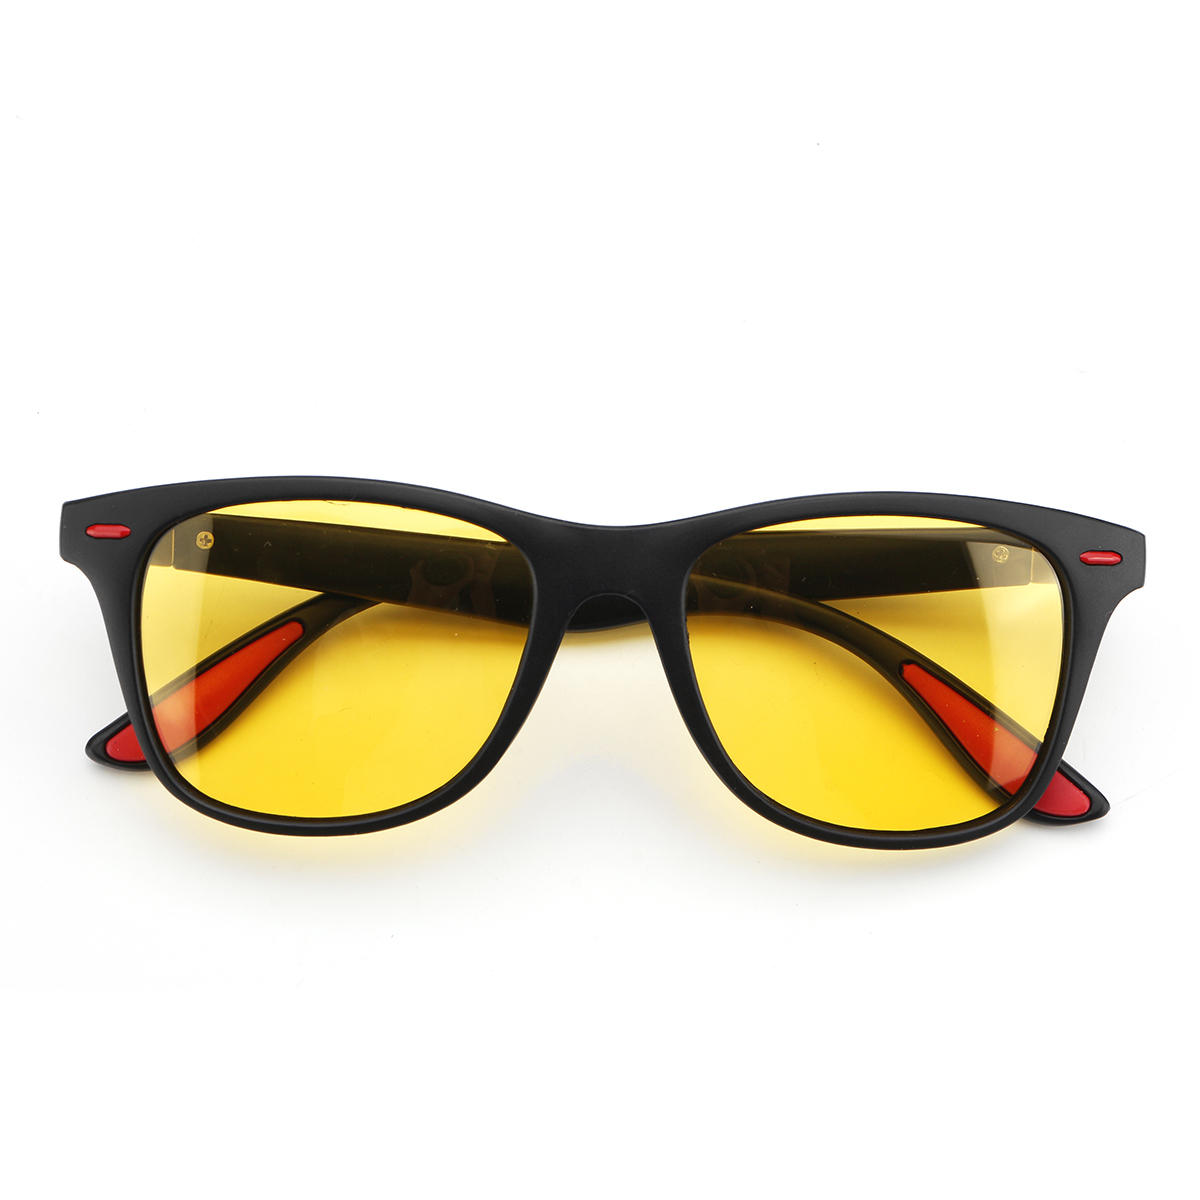 Polarized Clip On Sunglasses Driving Glasses Day Night Vision UV400 Men Women ui